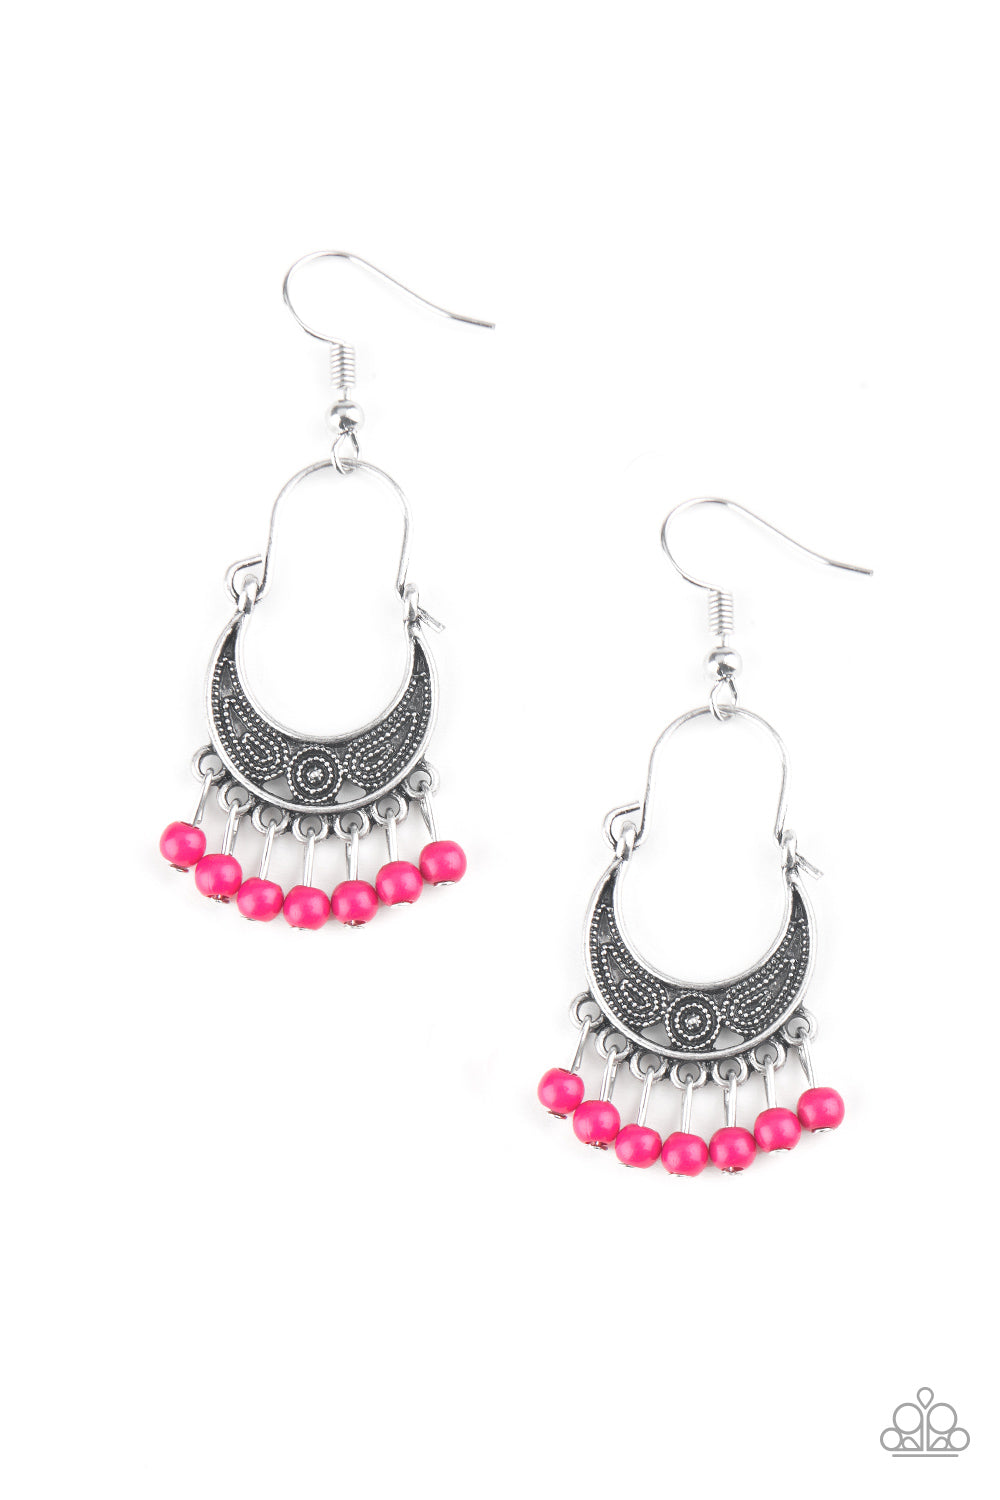 five-dollar-jewelry-hopelessly-houston-pink-earrings-paparazzi-accessories